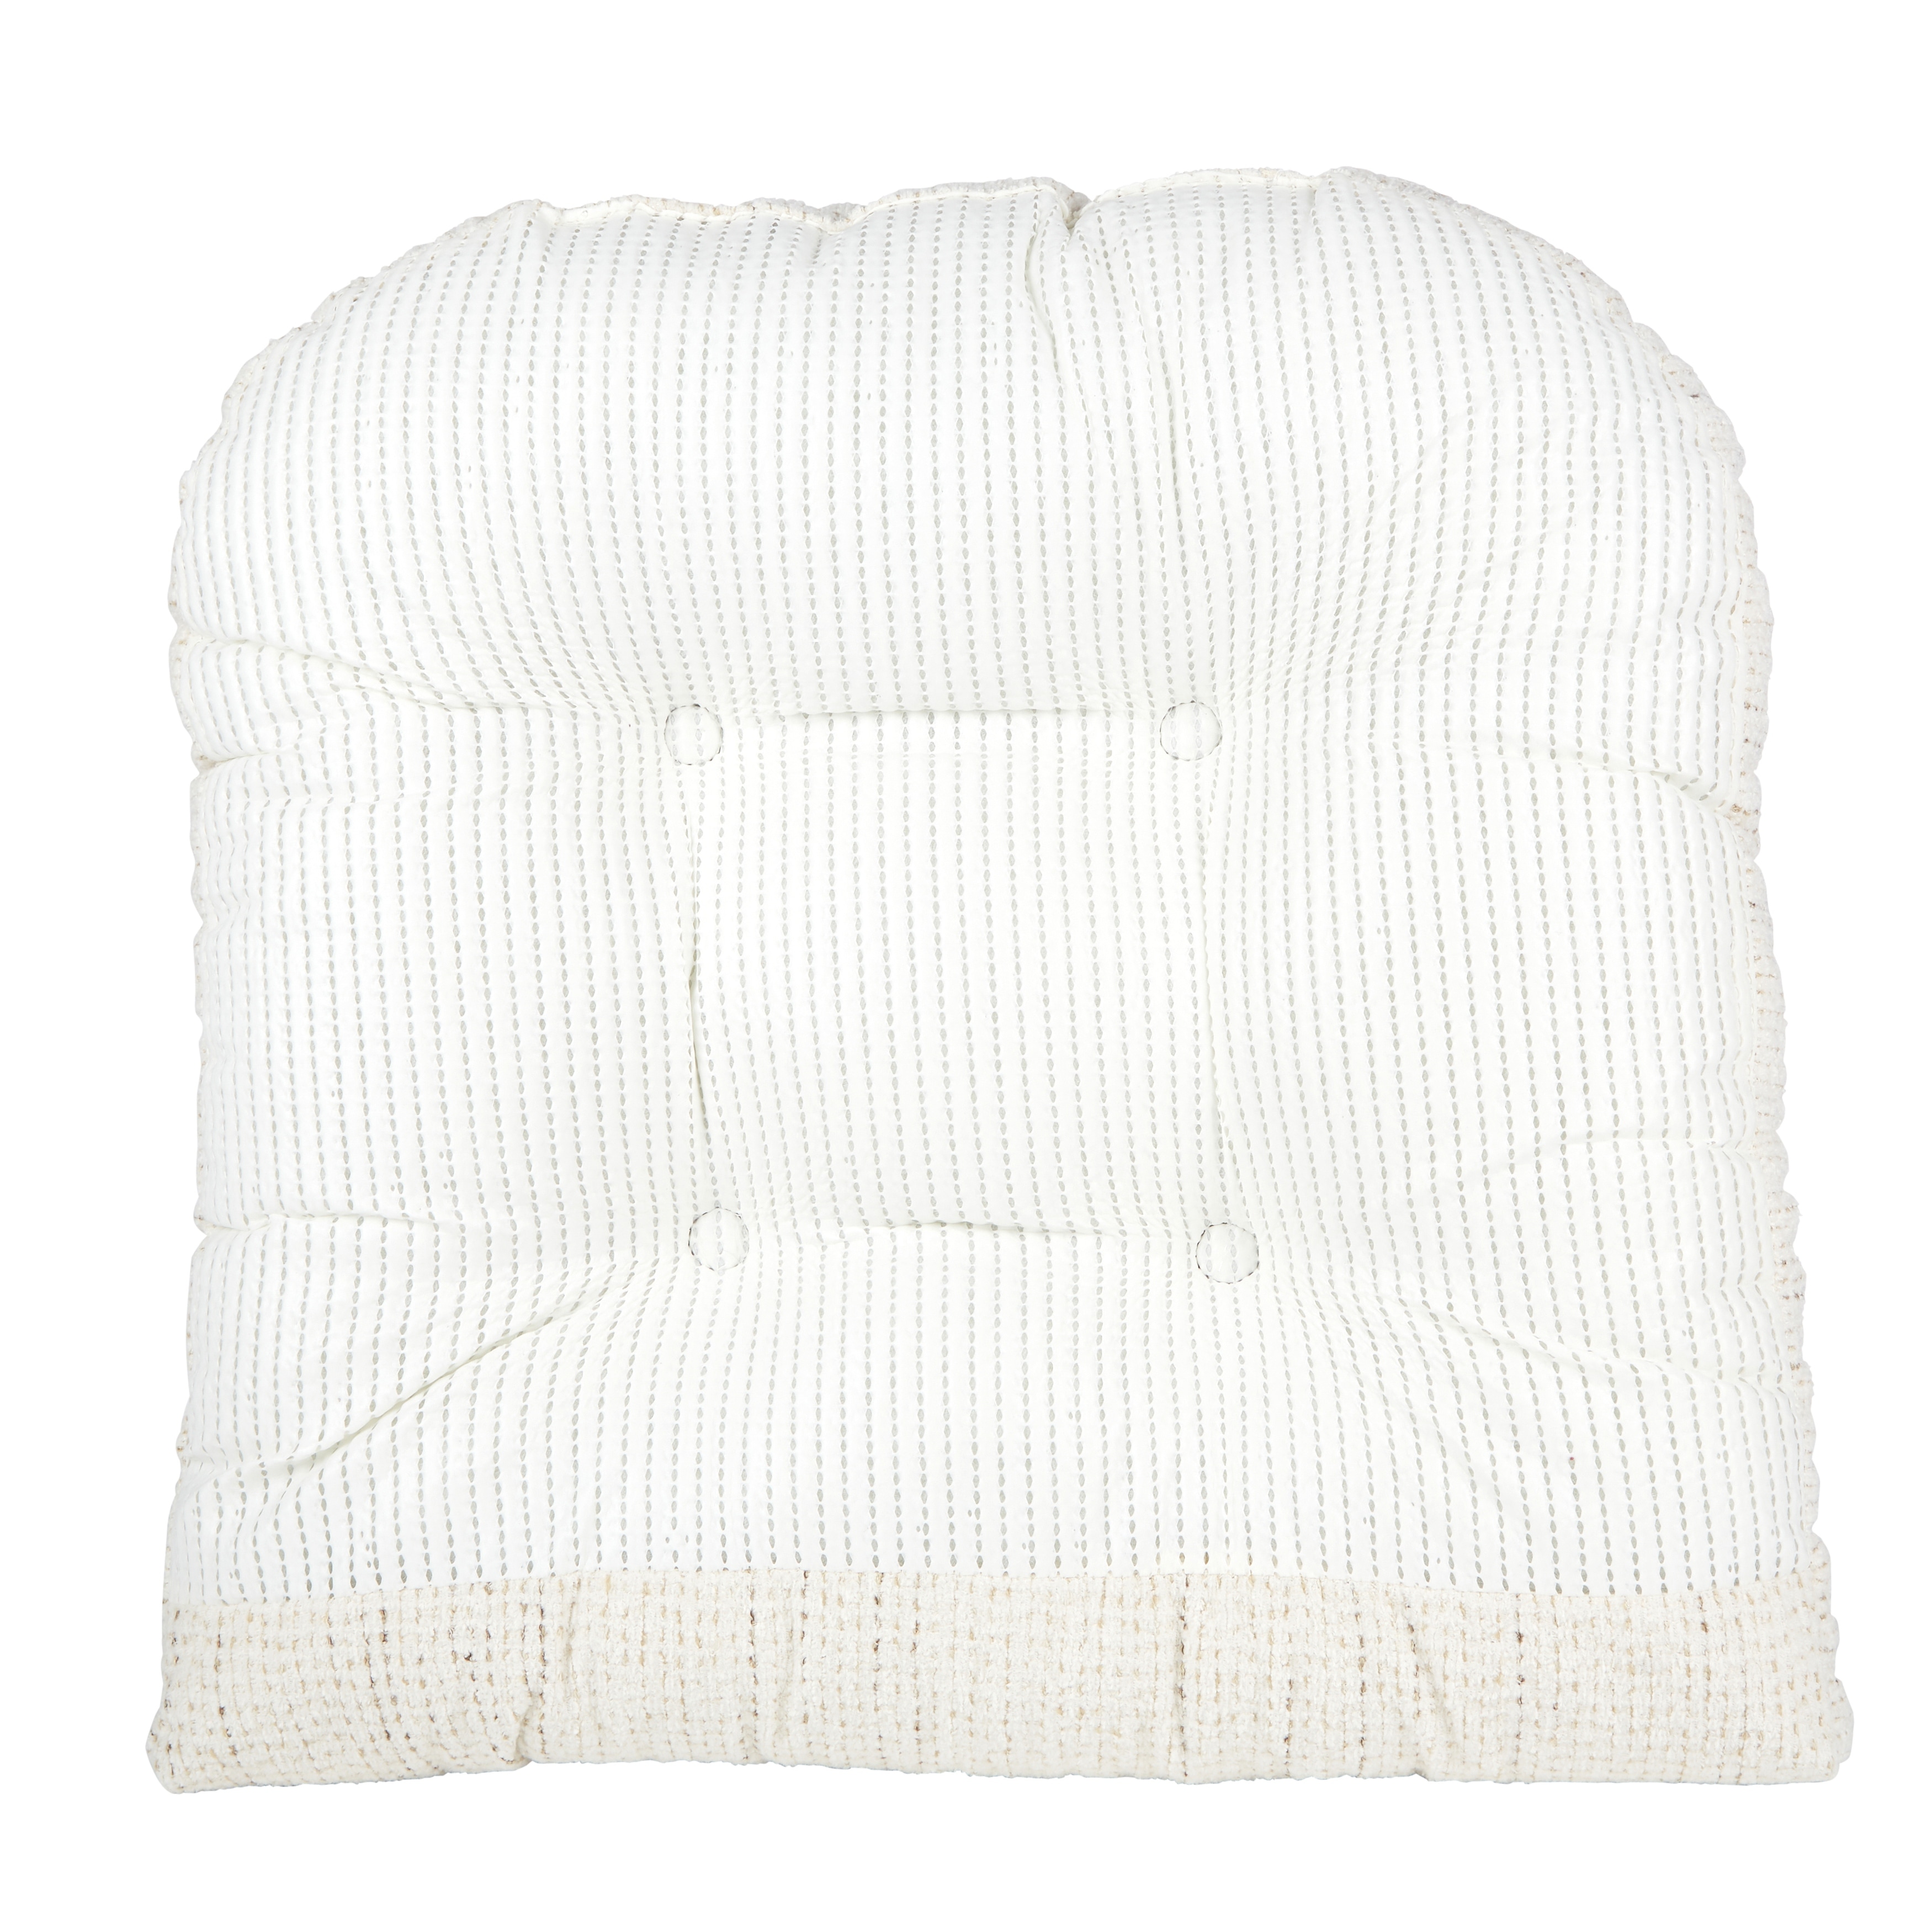 Klear Vu Tyson XL Rocking Chair Cushion Set - On Sale - Bed Bath